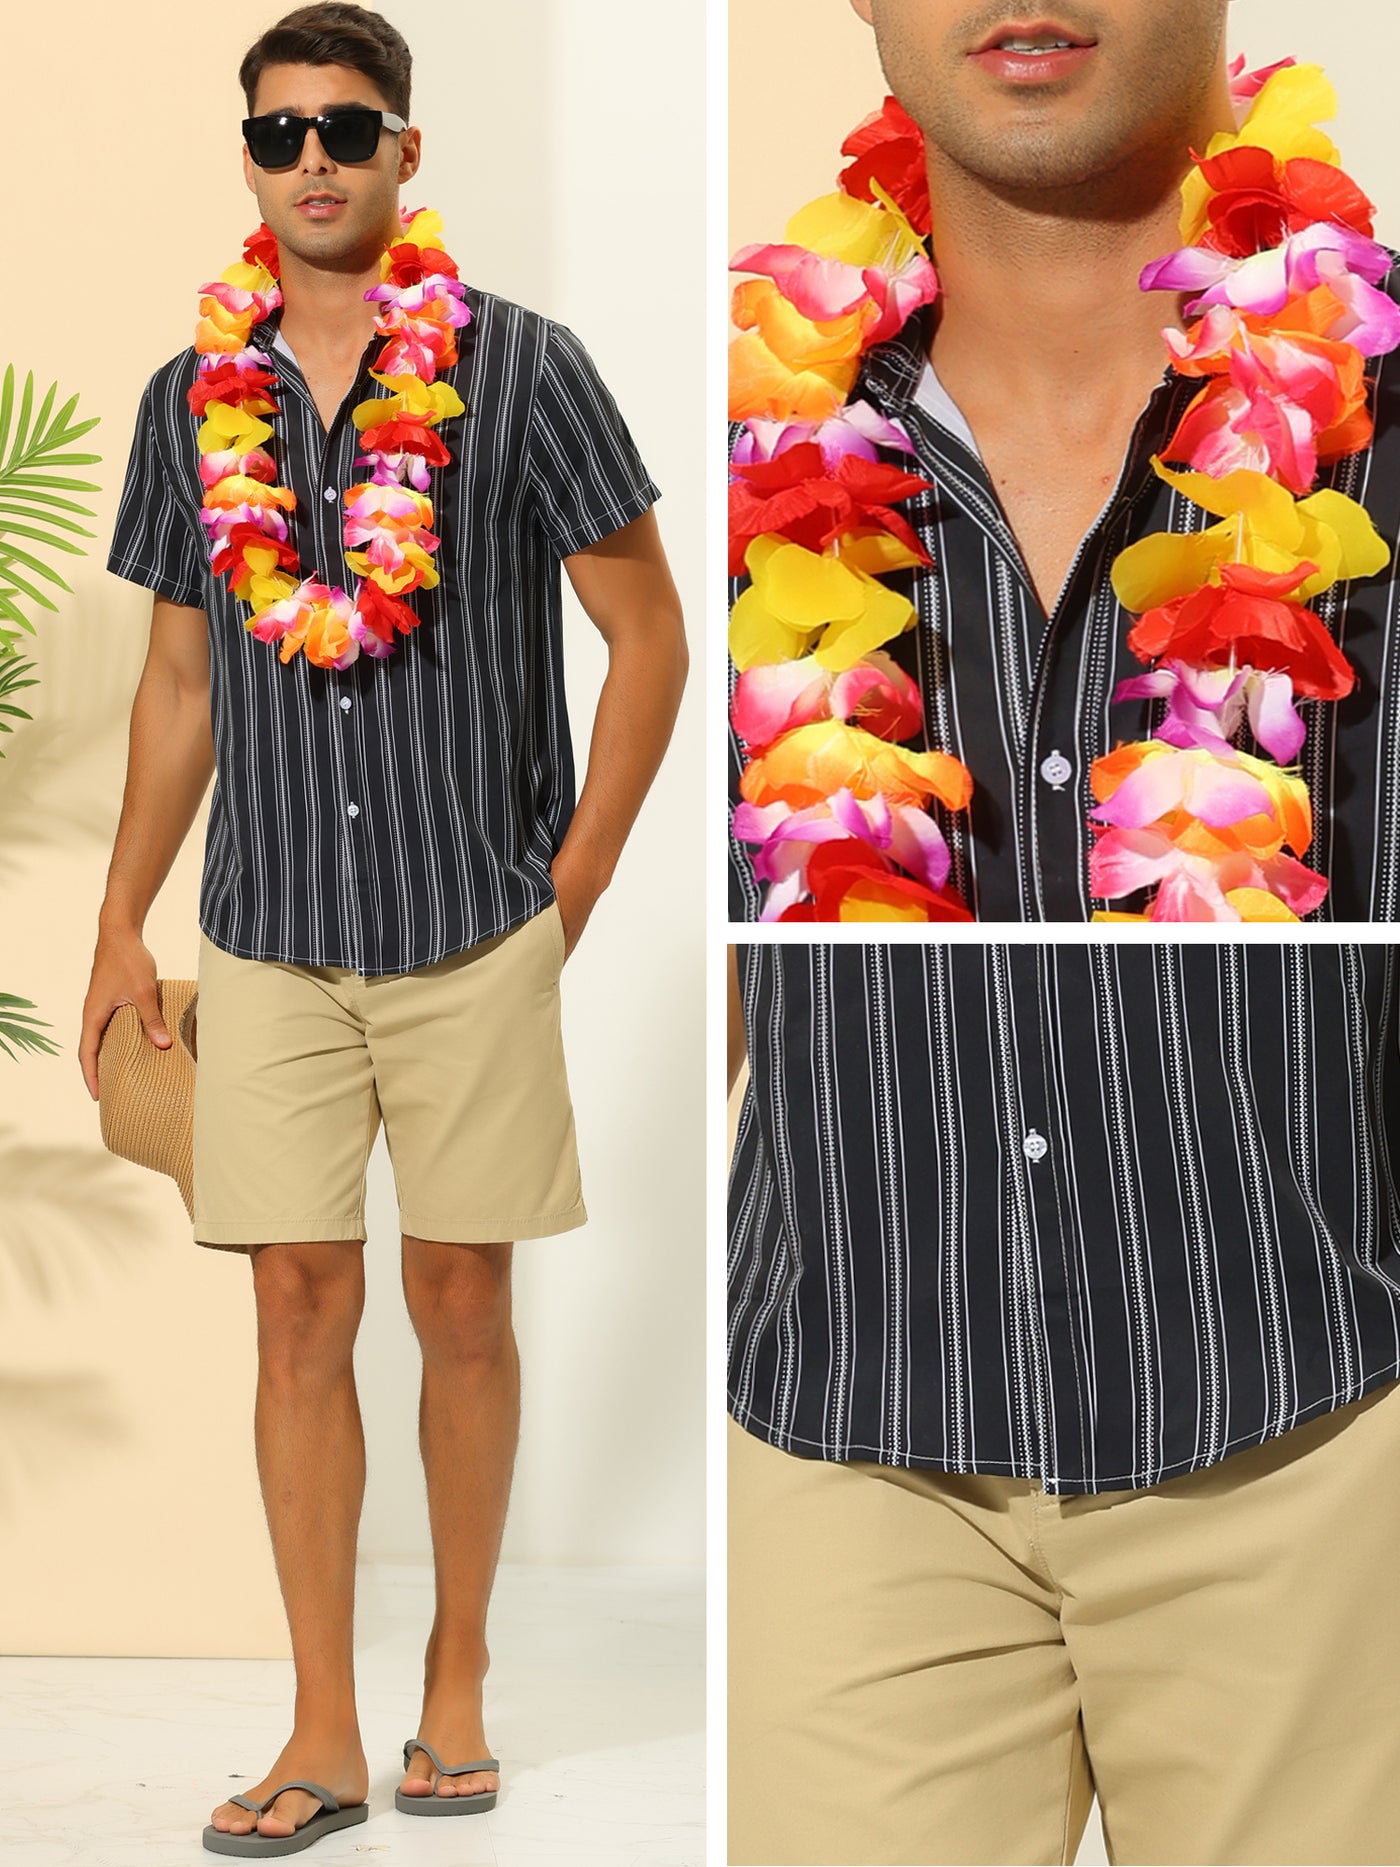 Bublédon Striped Shirts for Men's Summer Short Sleeves Button Down Beach Shirt